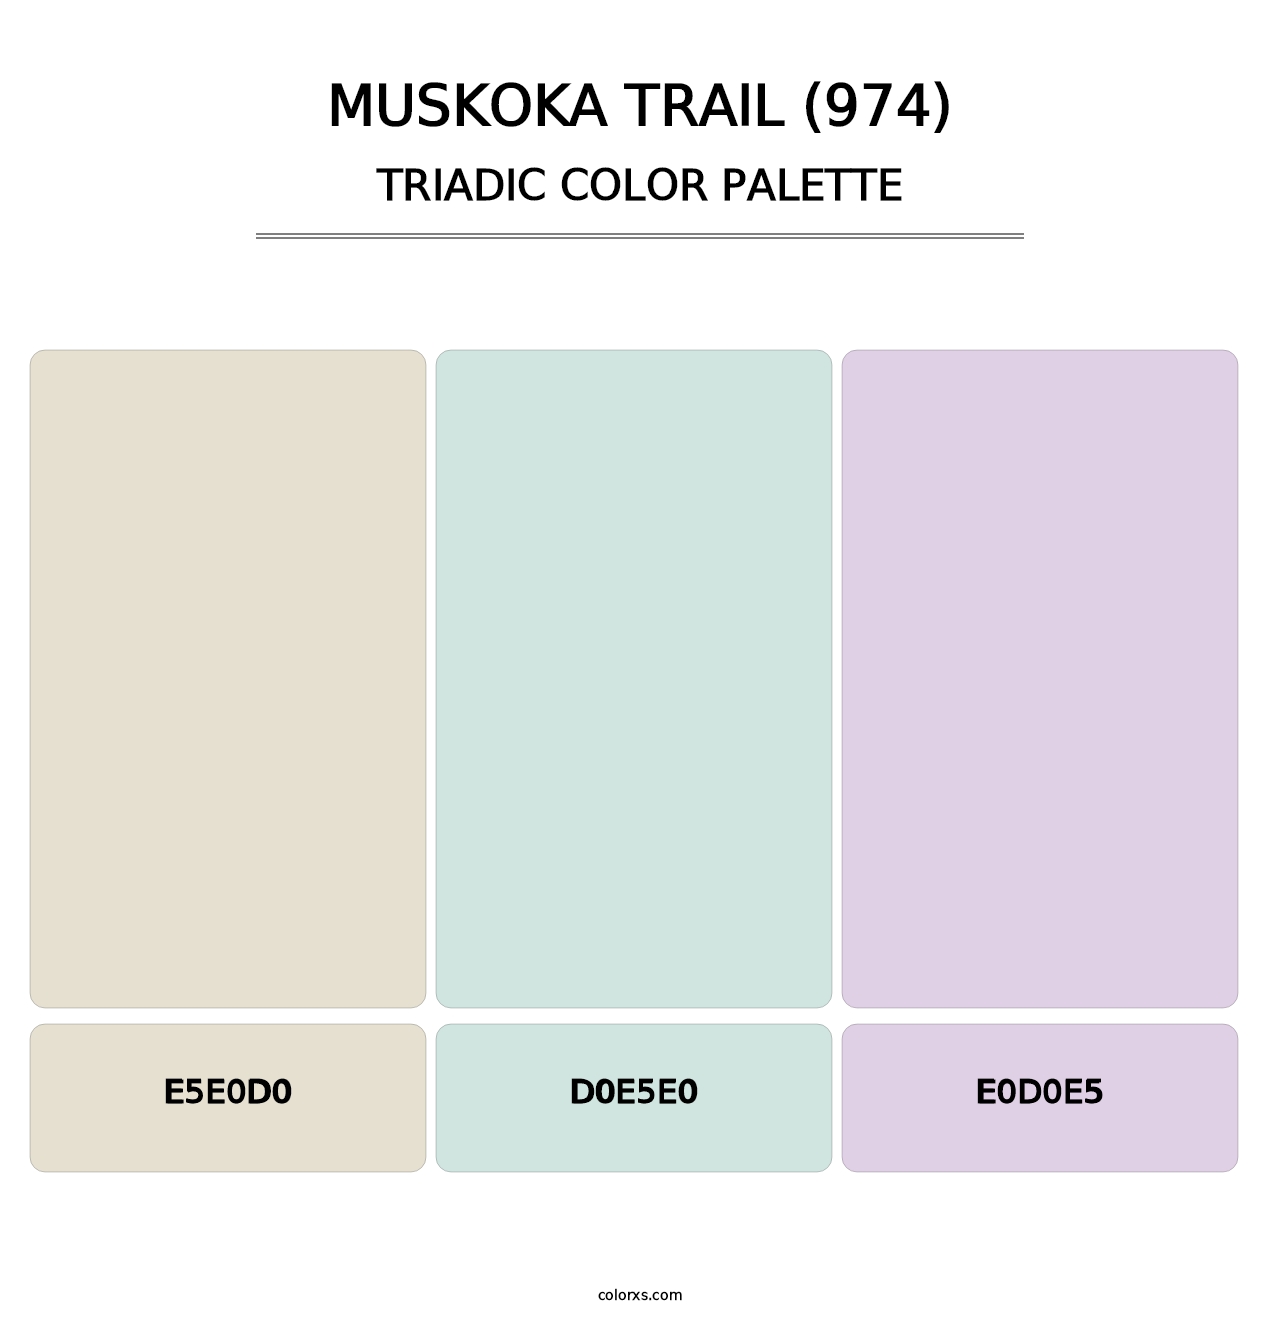 Muskoka Trail (974) - Triadic Color Palette